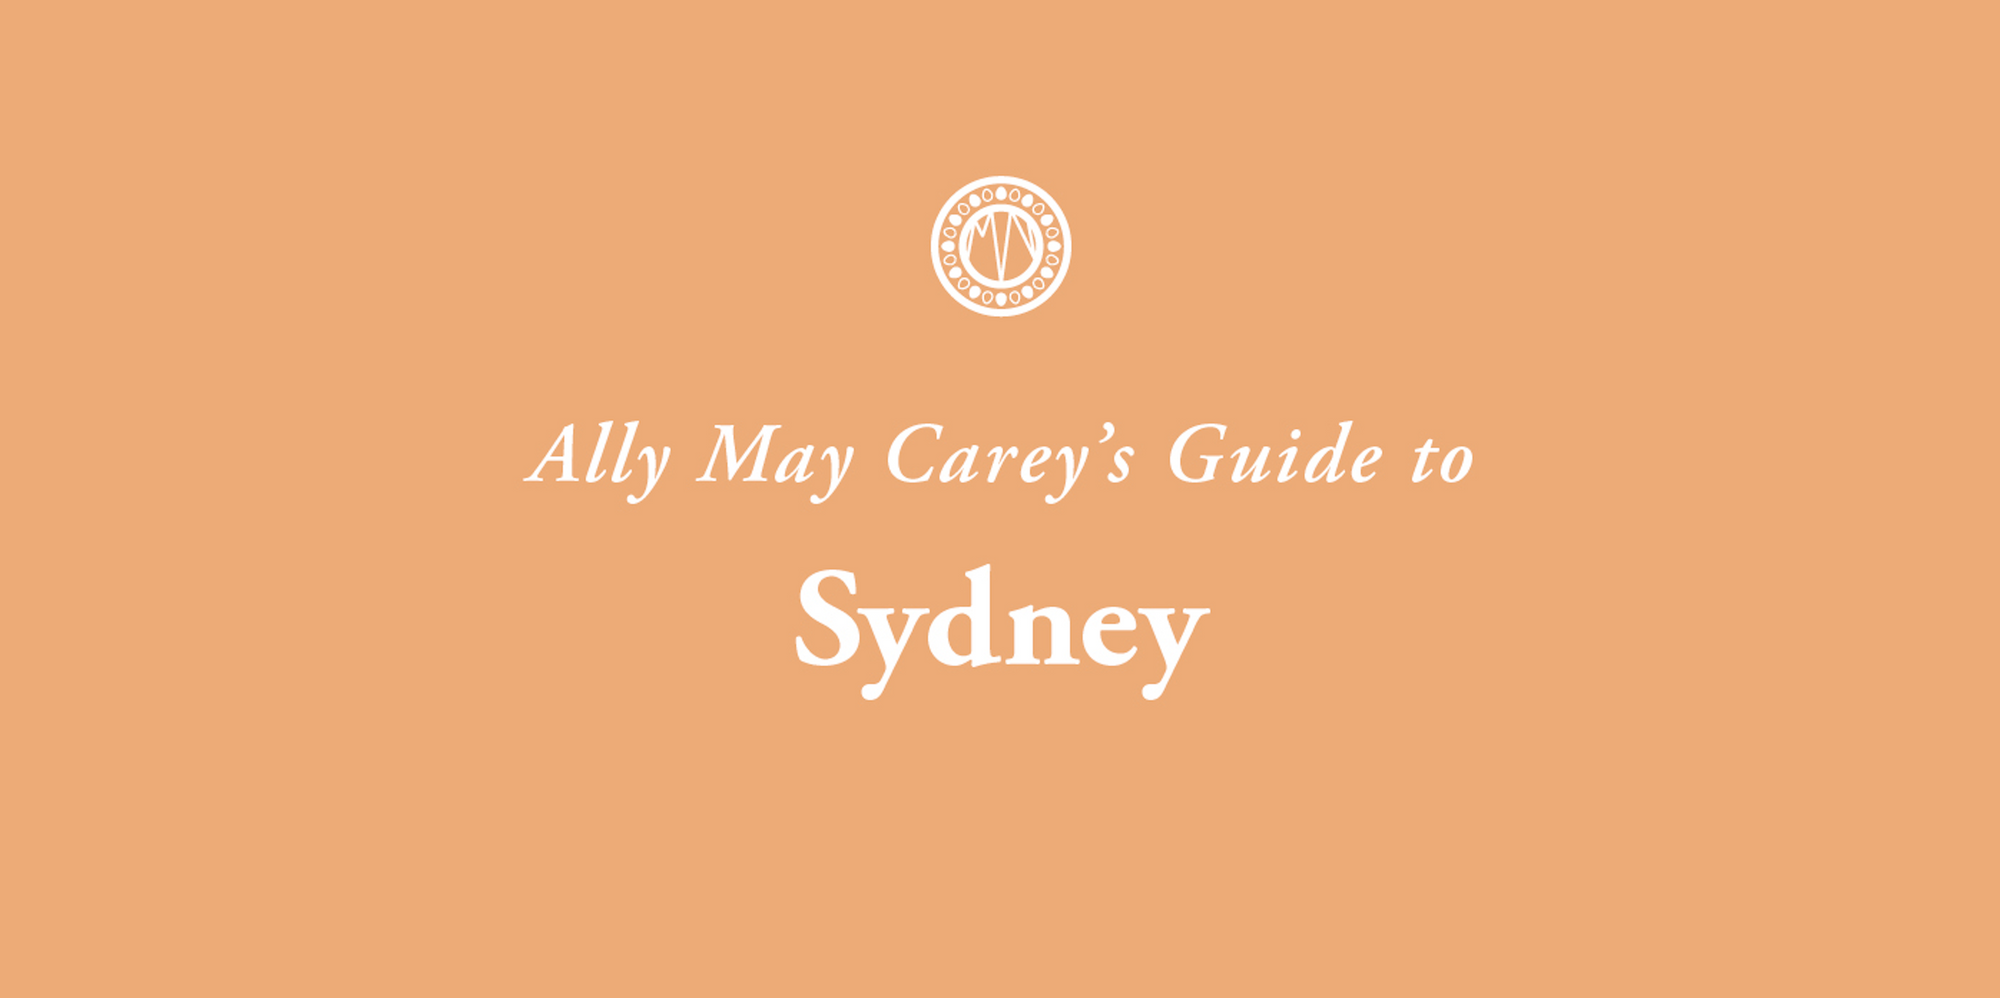 City guide Sydney